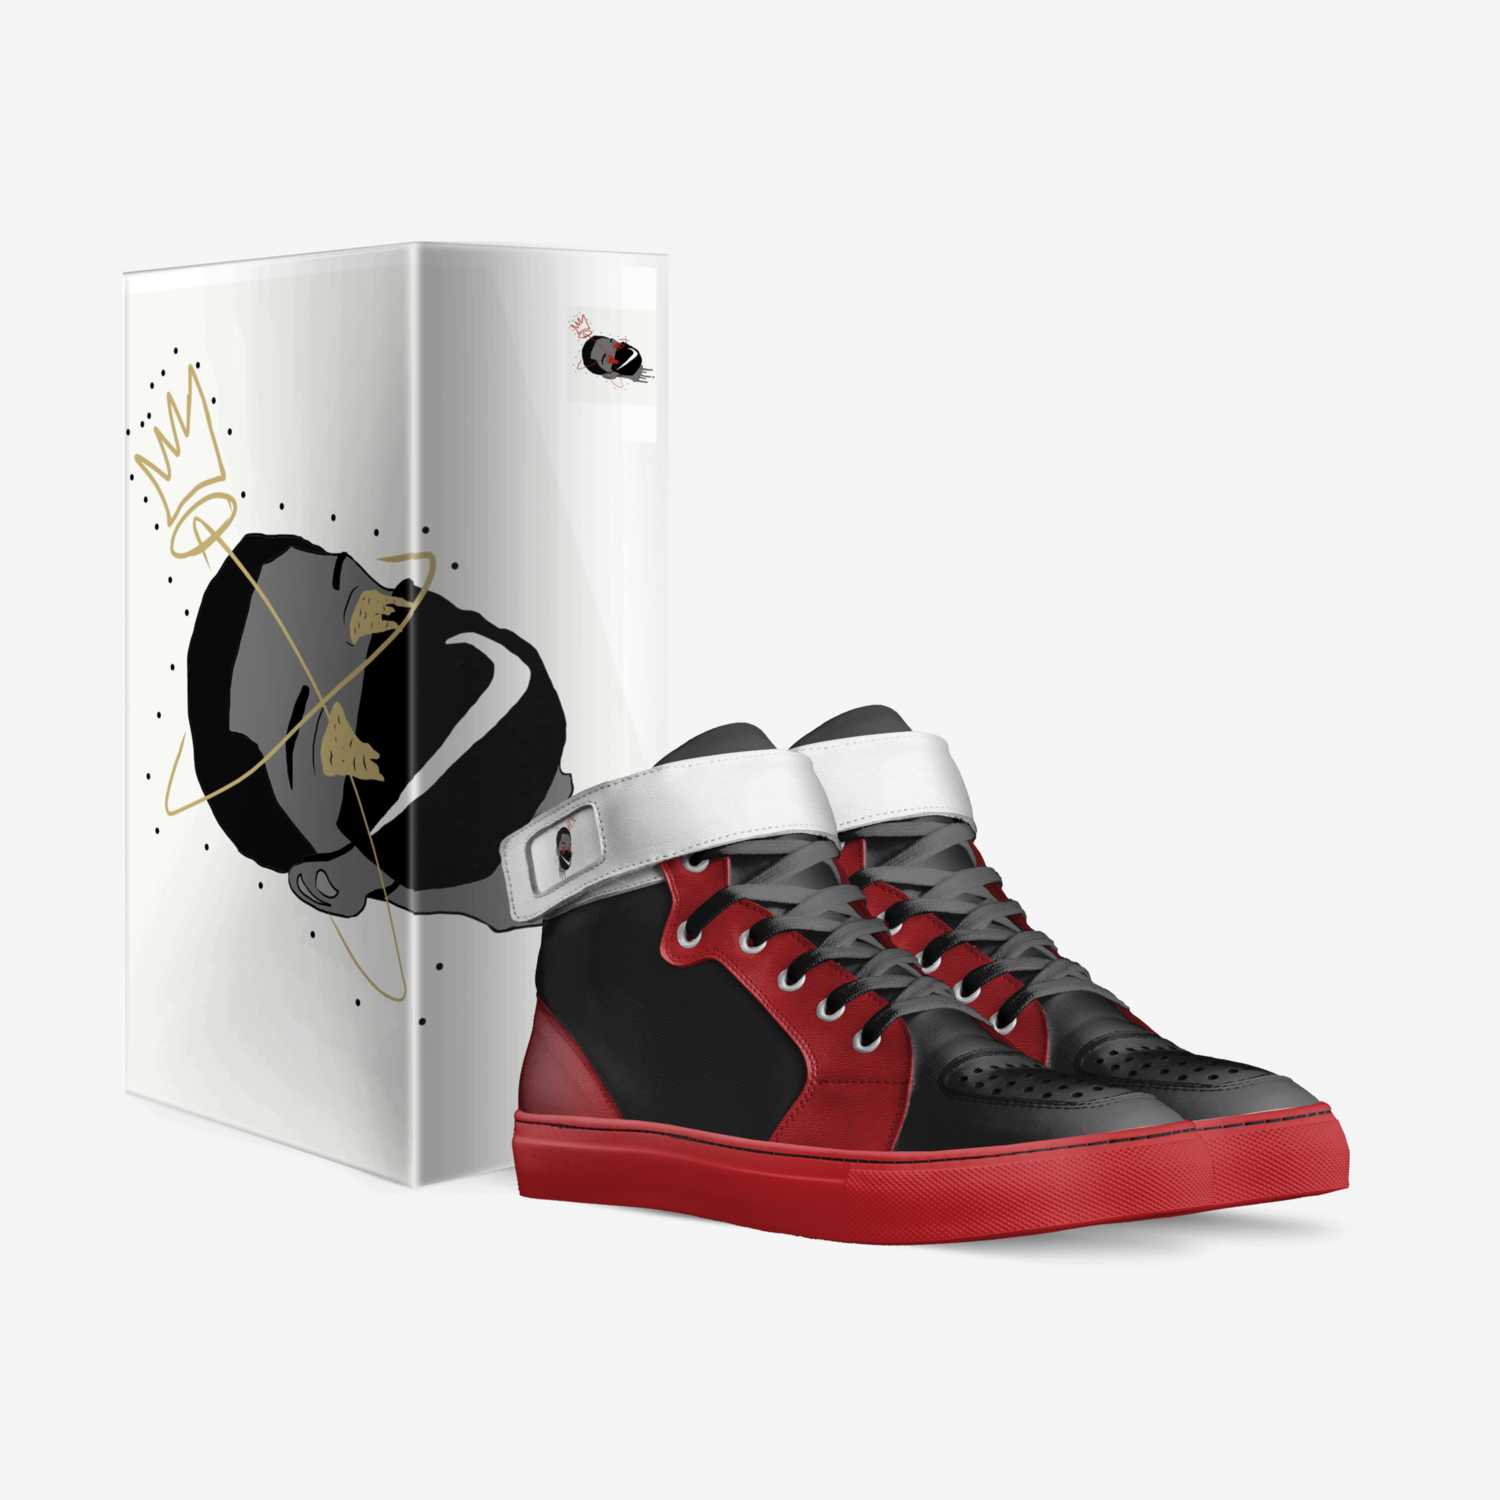 JuJu custom made in Italy shoes by Juju Jermaine | Box view